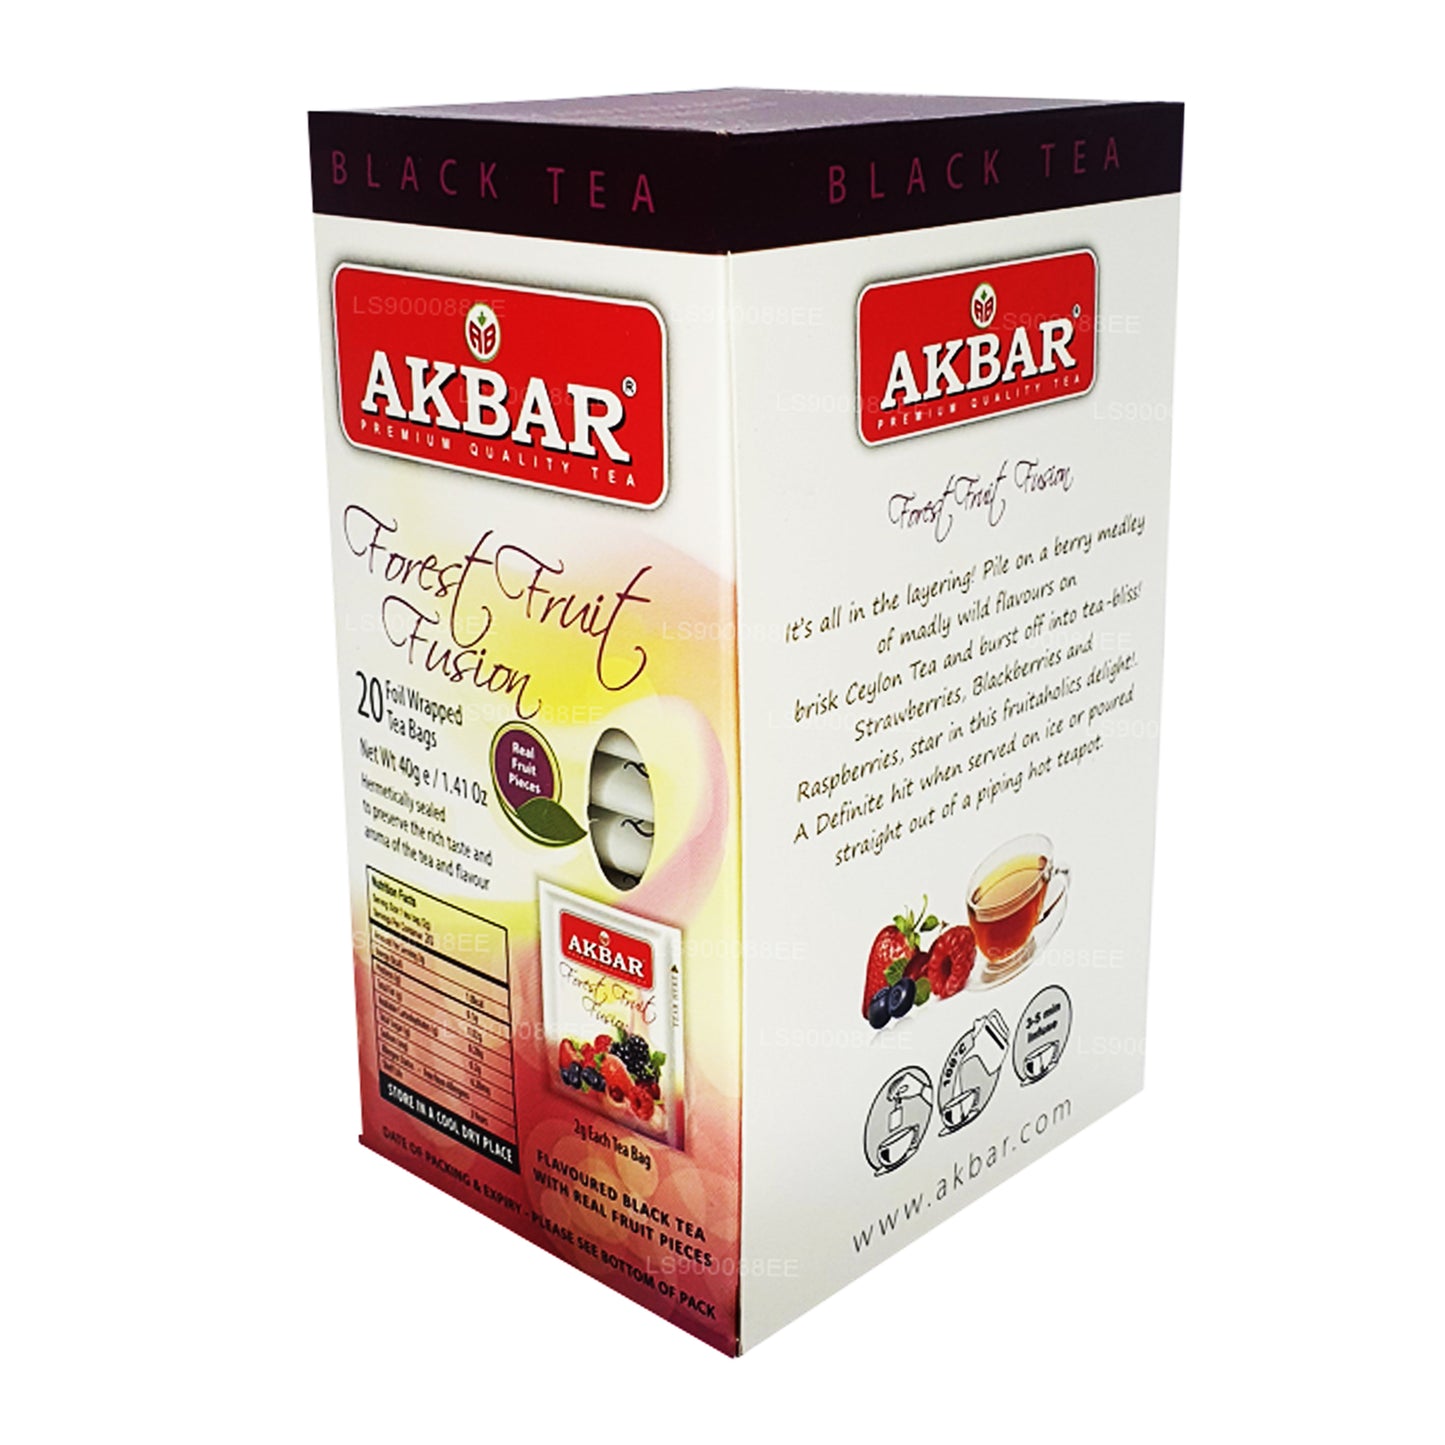 Akbar Forest Fruit Fusion (40g) 20 茶包